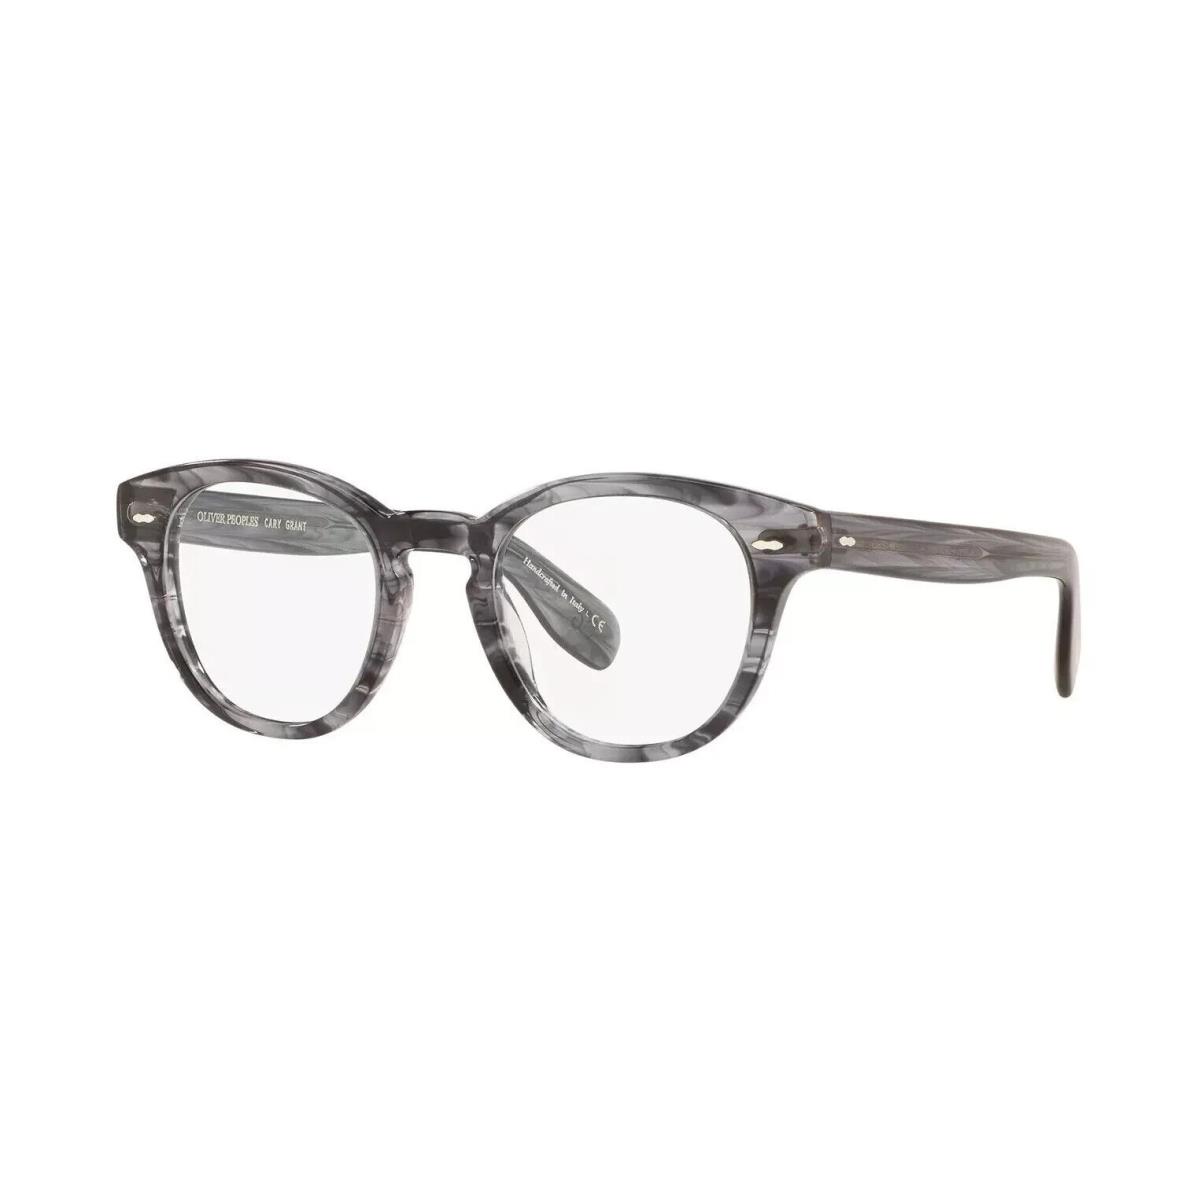 Oliver Peoples Cary Grant OV5413U 1688 48 Navy Smoke Eyeglasses Optical Frame